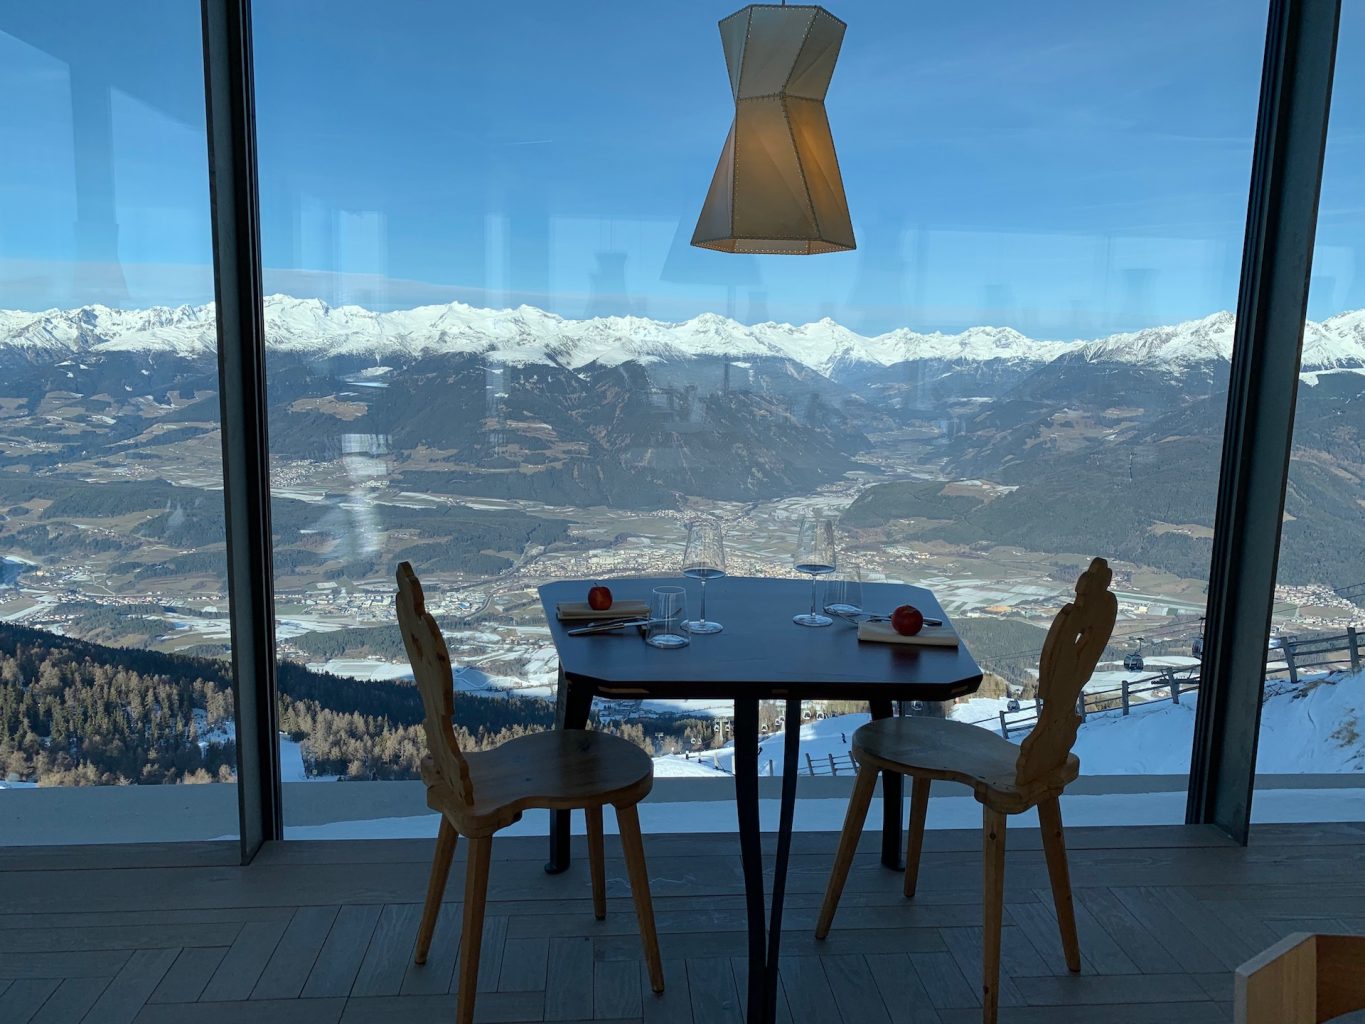 Tavolo, Dolomiti, AlpiNN, Norbert Niederkofler, Plan de Corones, Trentino-Alto Adige, Cook the mountain